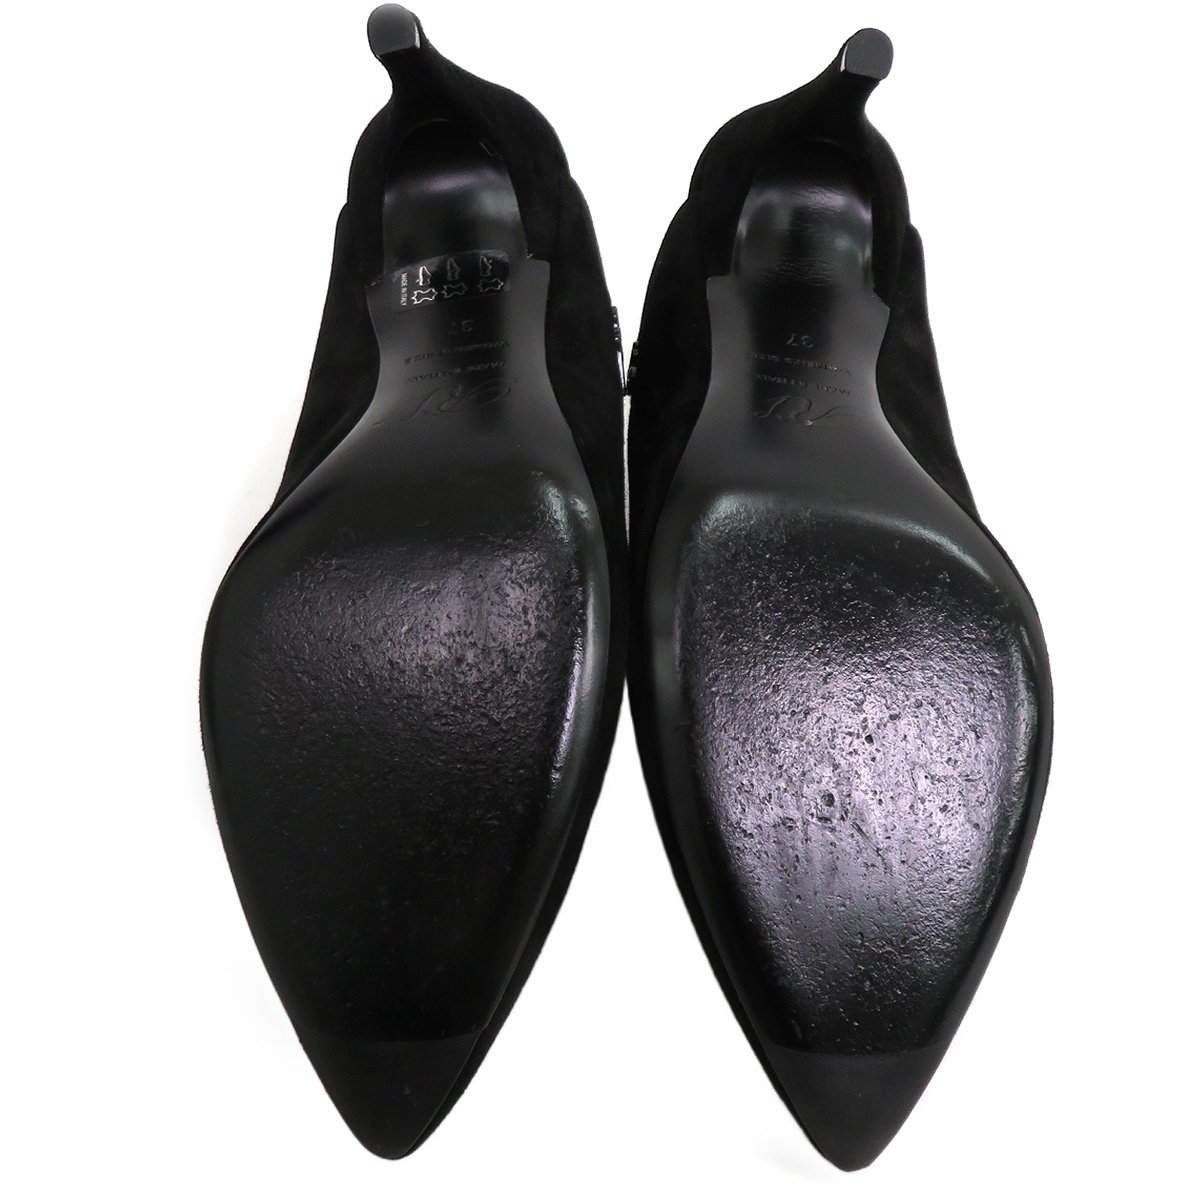  beautiful goods Roger Vivierroje vi vi eRV Logo suede leather mules sabot sandals po Inte dotu pumps 37 black 45475